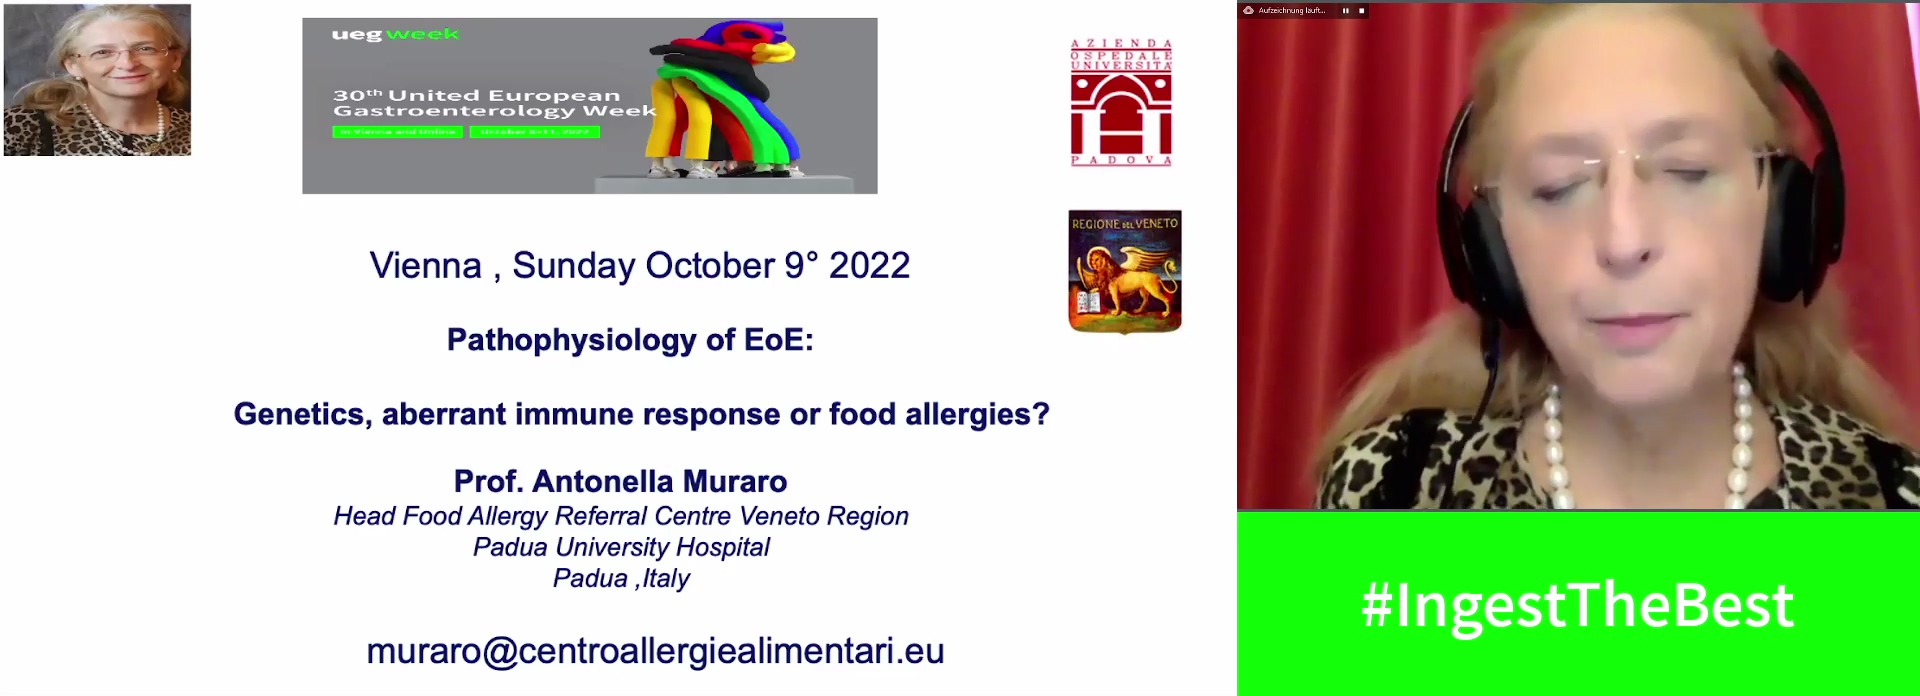 Pathophysiology of EoE: Genetics, aberrant immune response or food allergies?